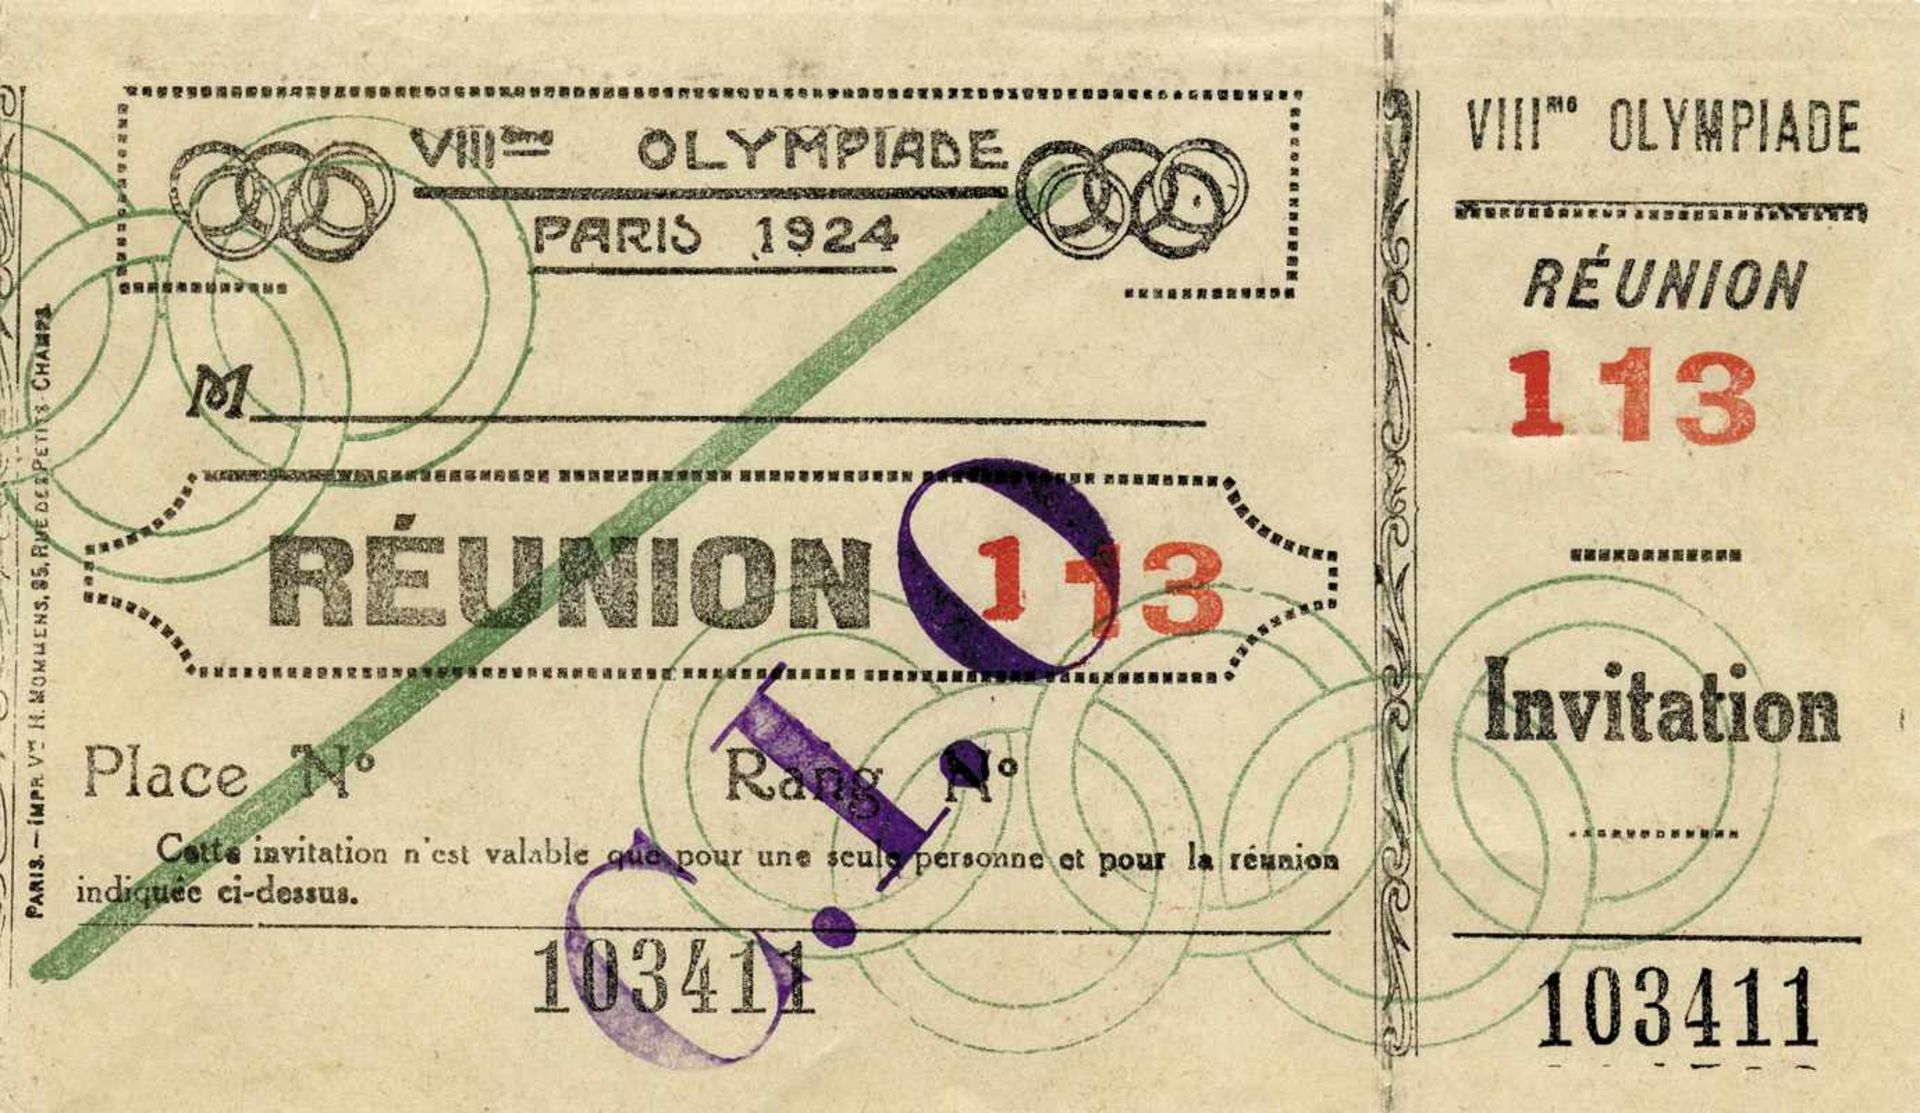 Olympic Games Paris 1924 Ticket IOC - Ticket VIIIe Olympiade Paris 1924. Reunion 113. invitation.